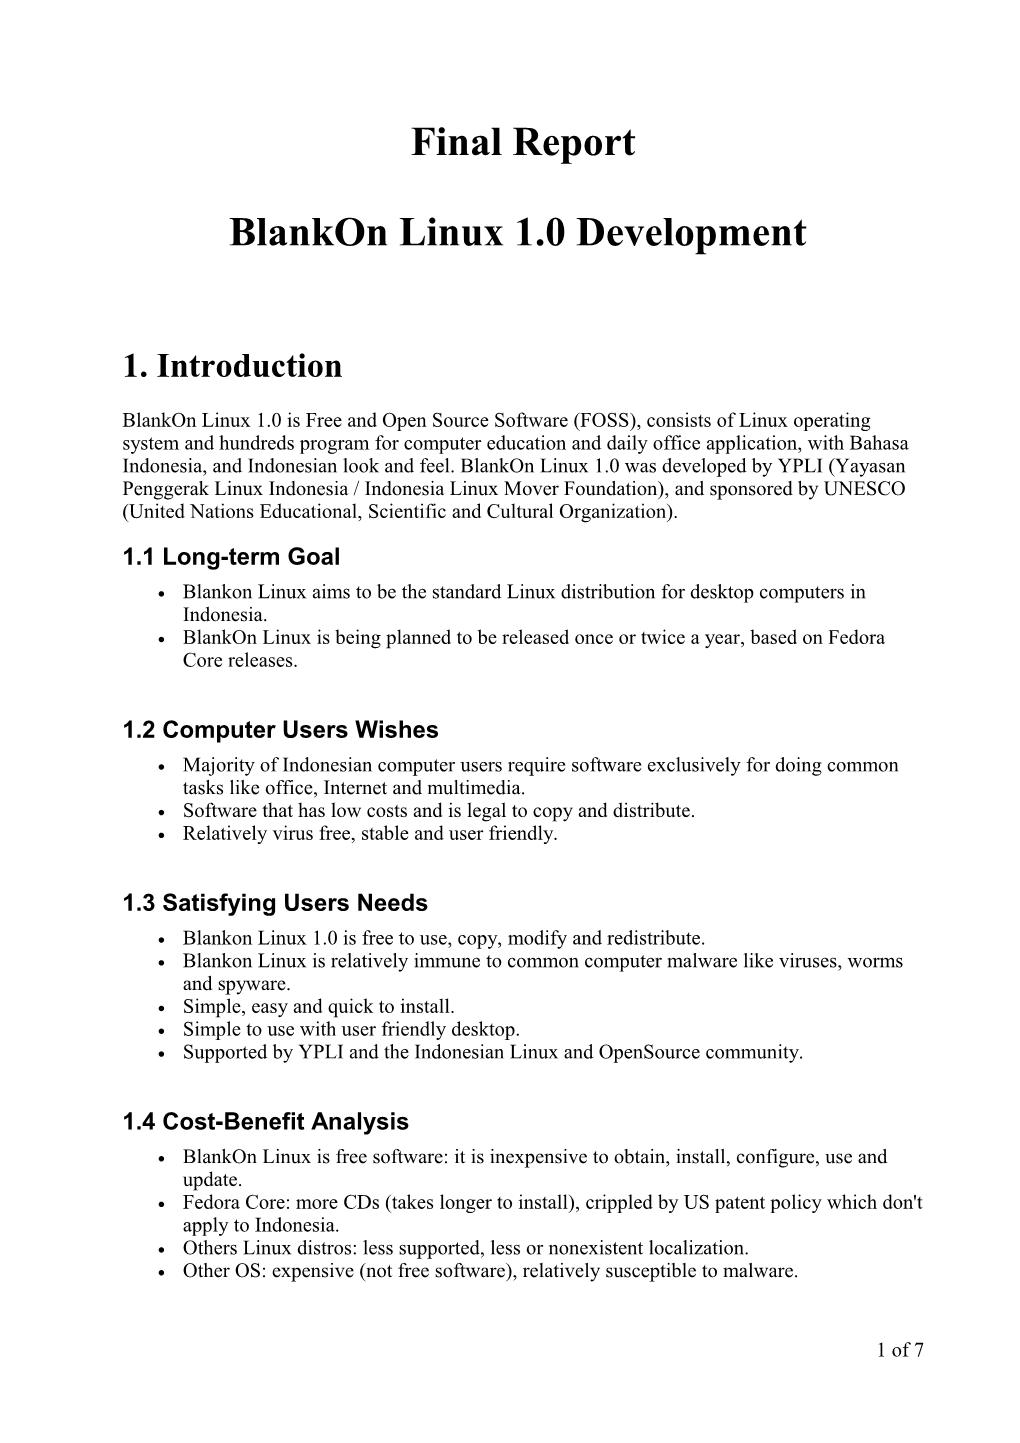 Blankon Linux 1.0 Development